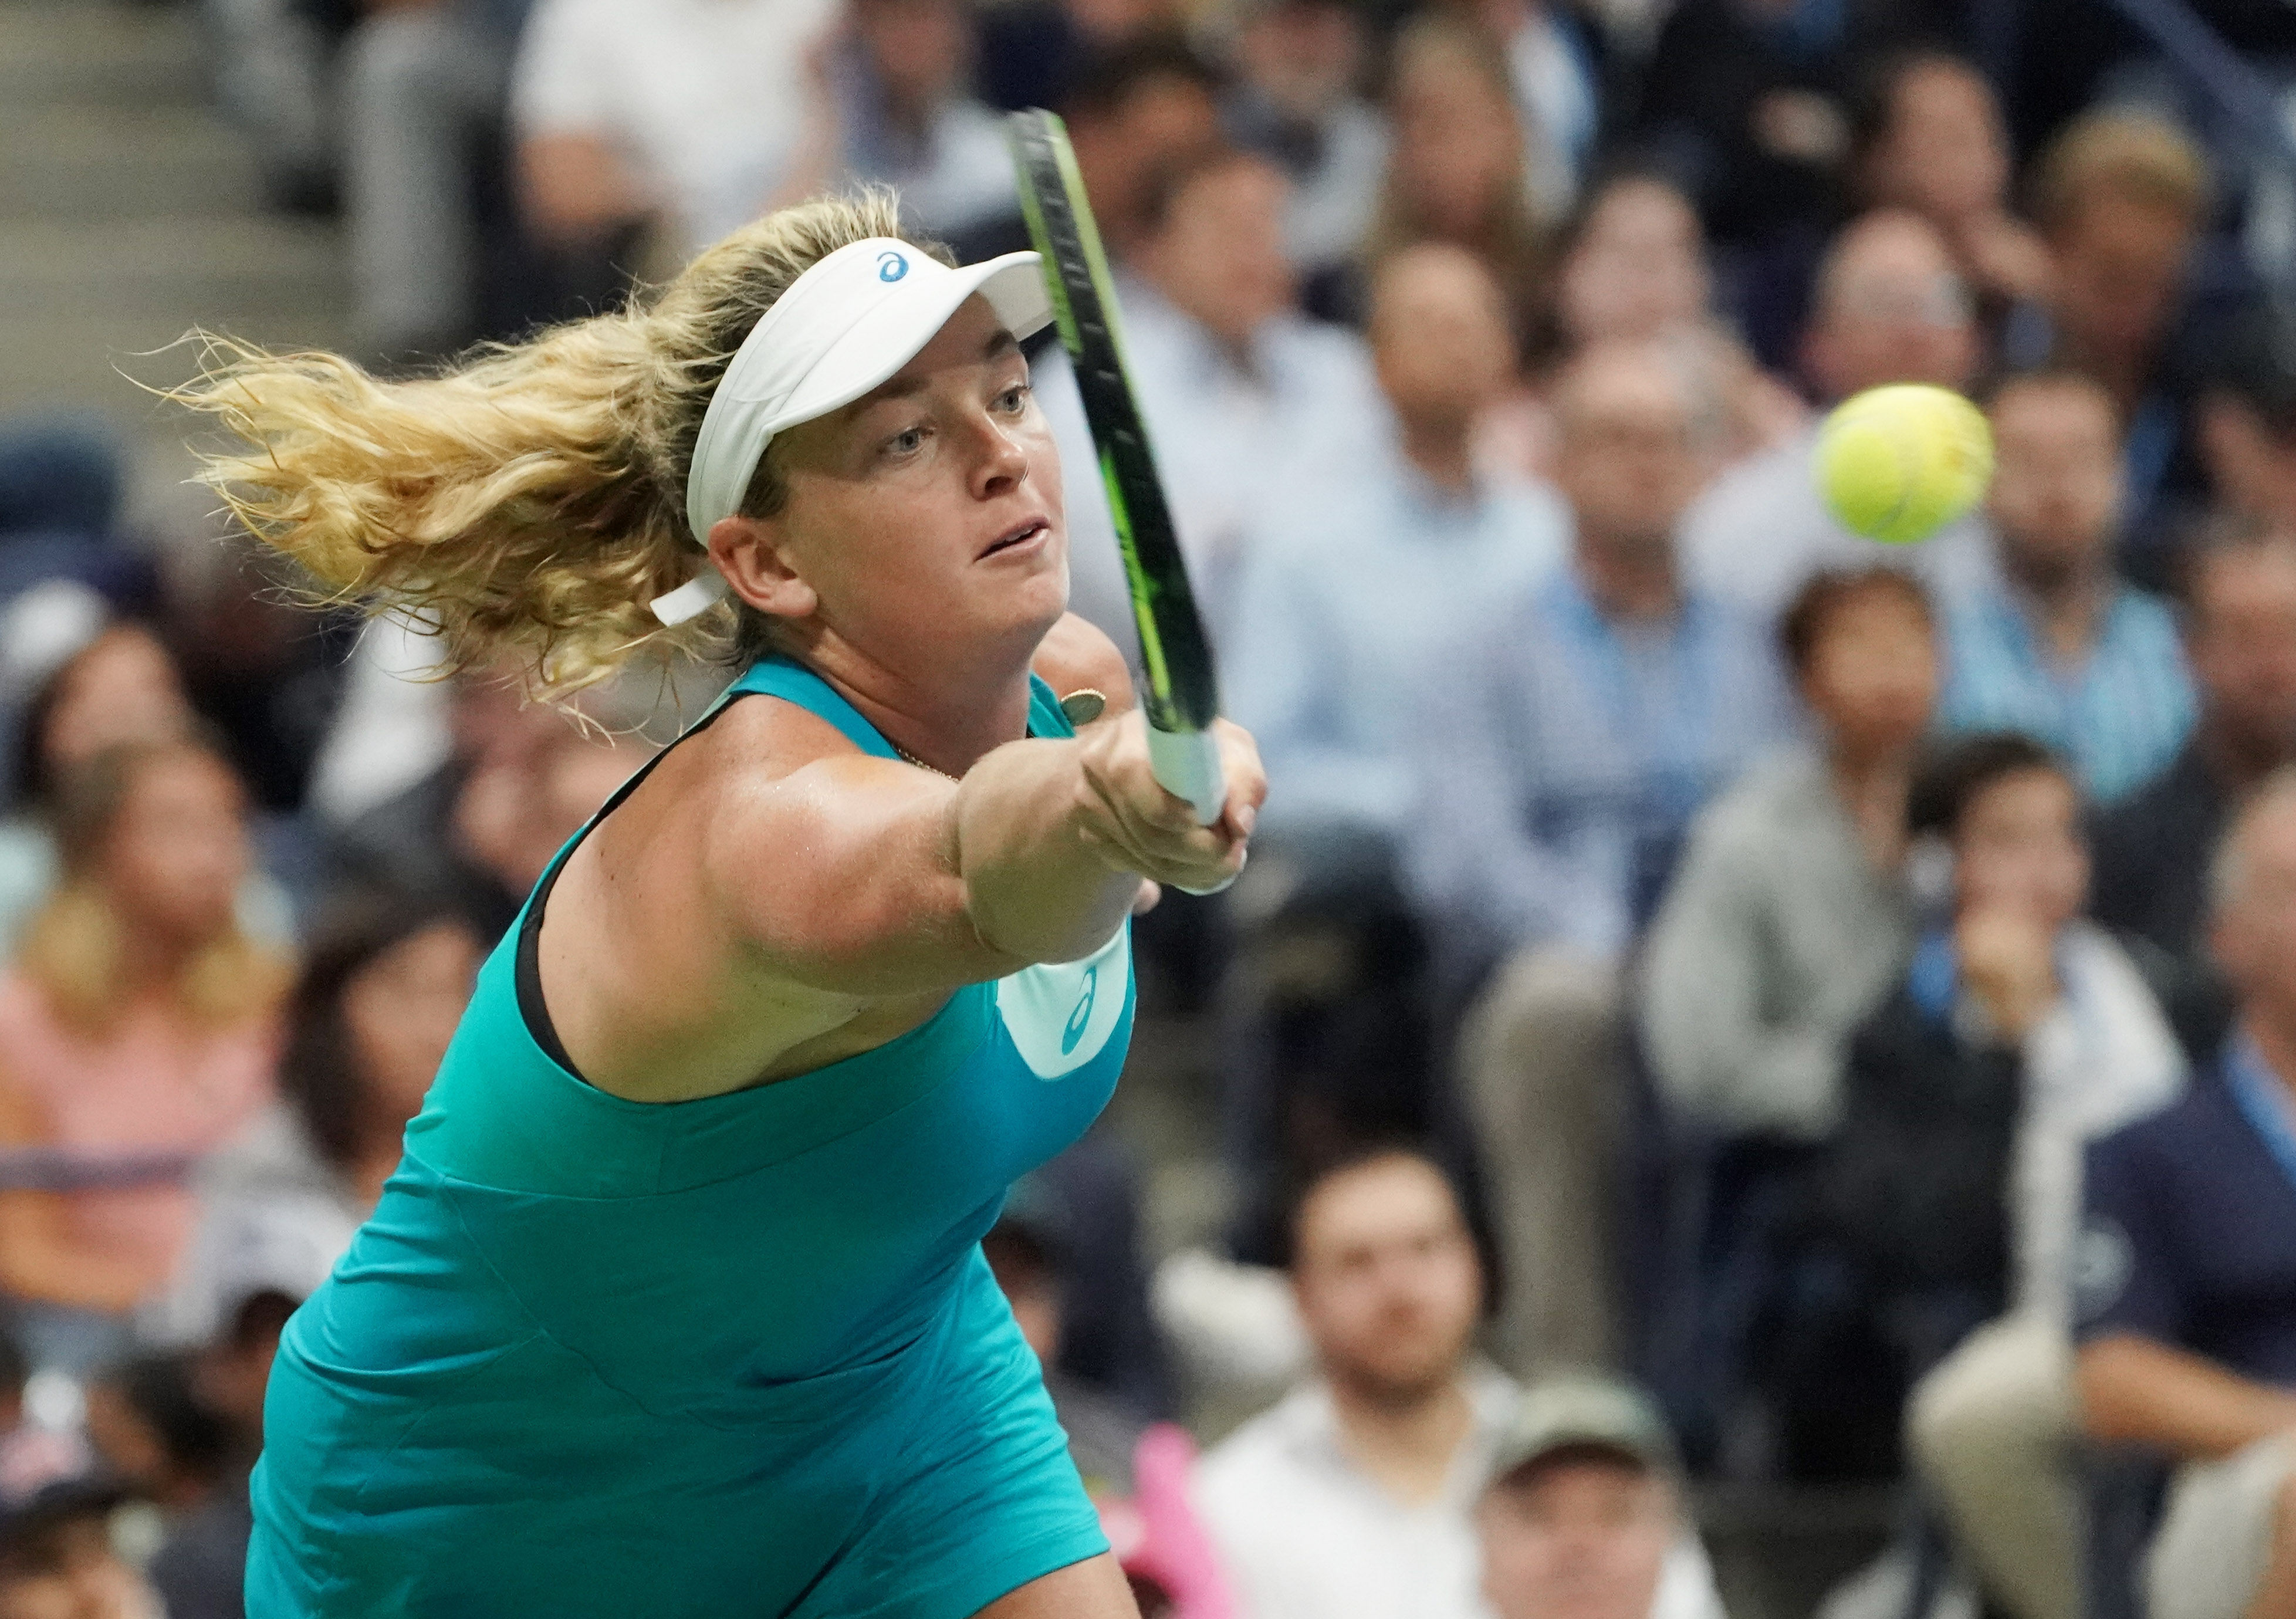 Tennis: CoCo Vandeweghe knocks world No. 1 Karolina Pliskova out of U.S. Open